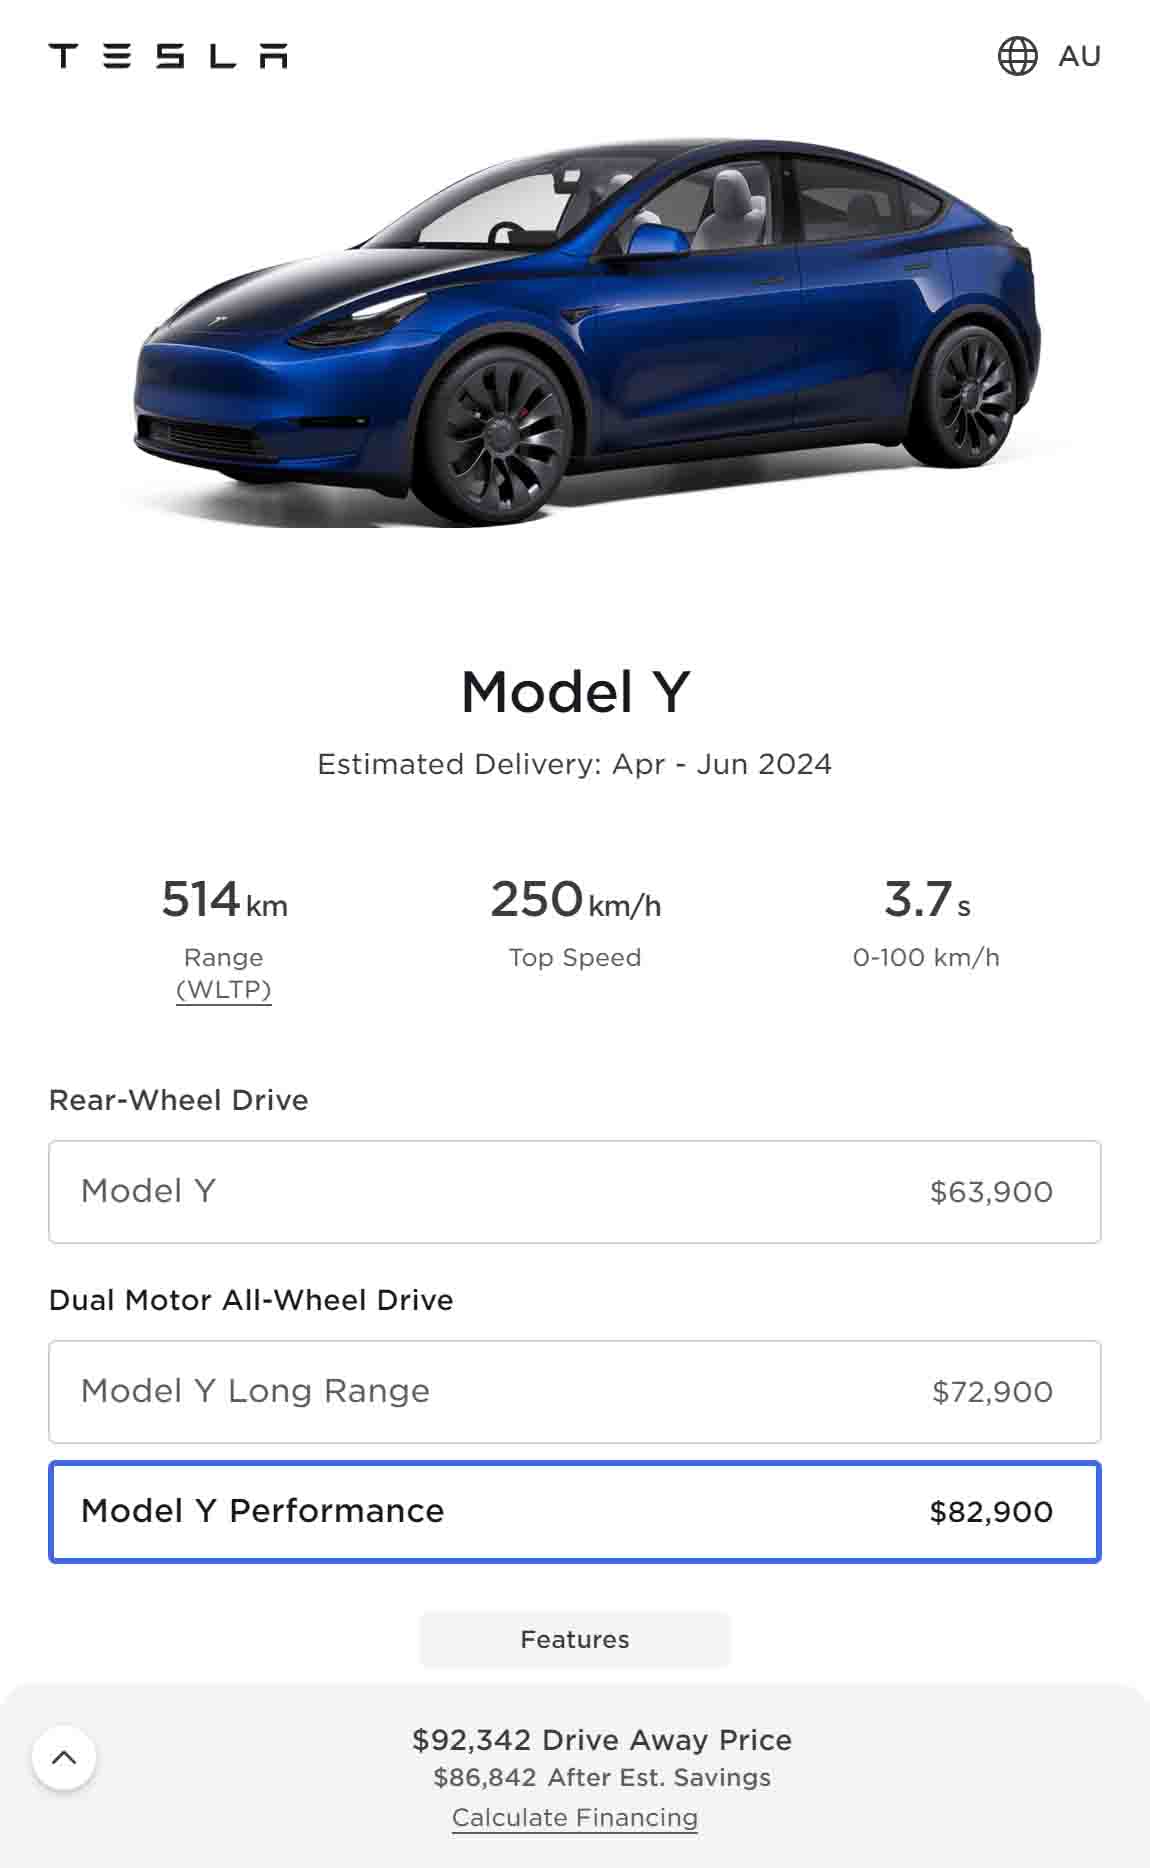 Tesla Model Y Price Details in Australia As of April 2024 